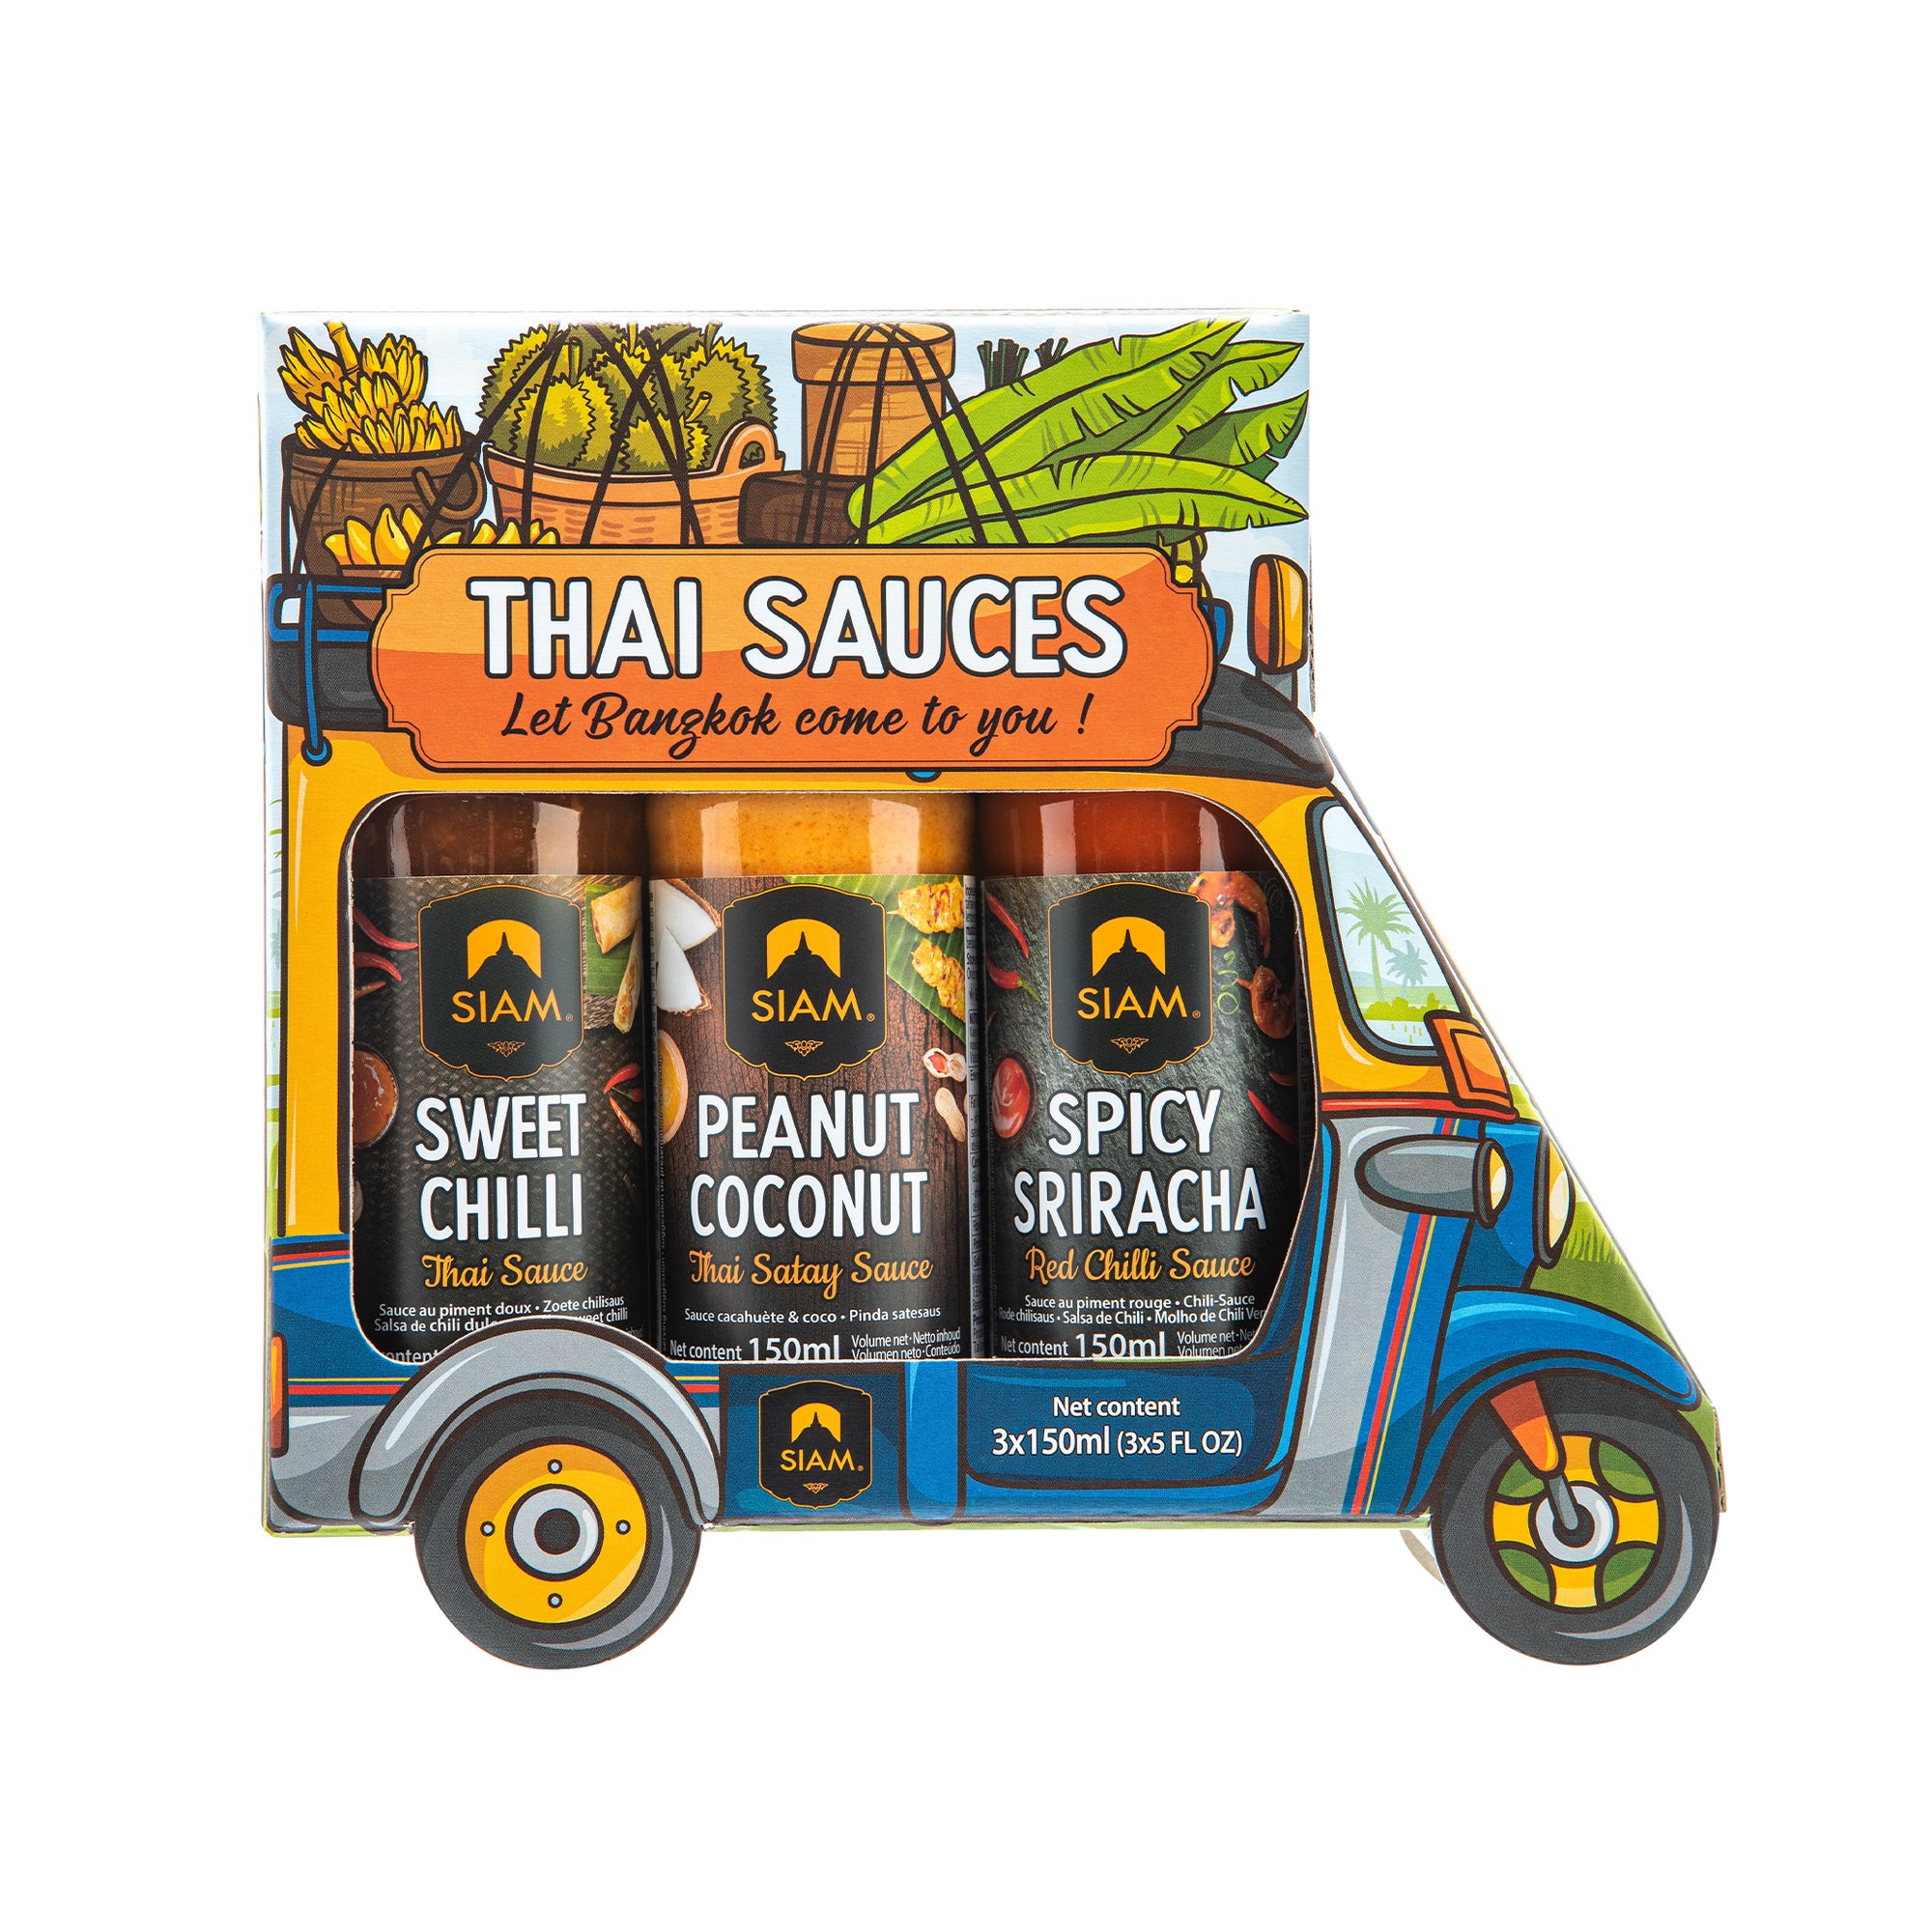 SIAM Tuk Tuk Gift Box w/Thai Sauces - Sweet Chili, Peanut Coconut, Spicy Sriracha